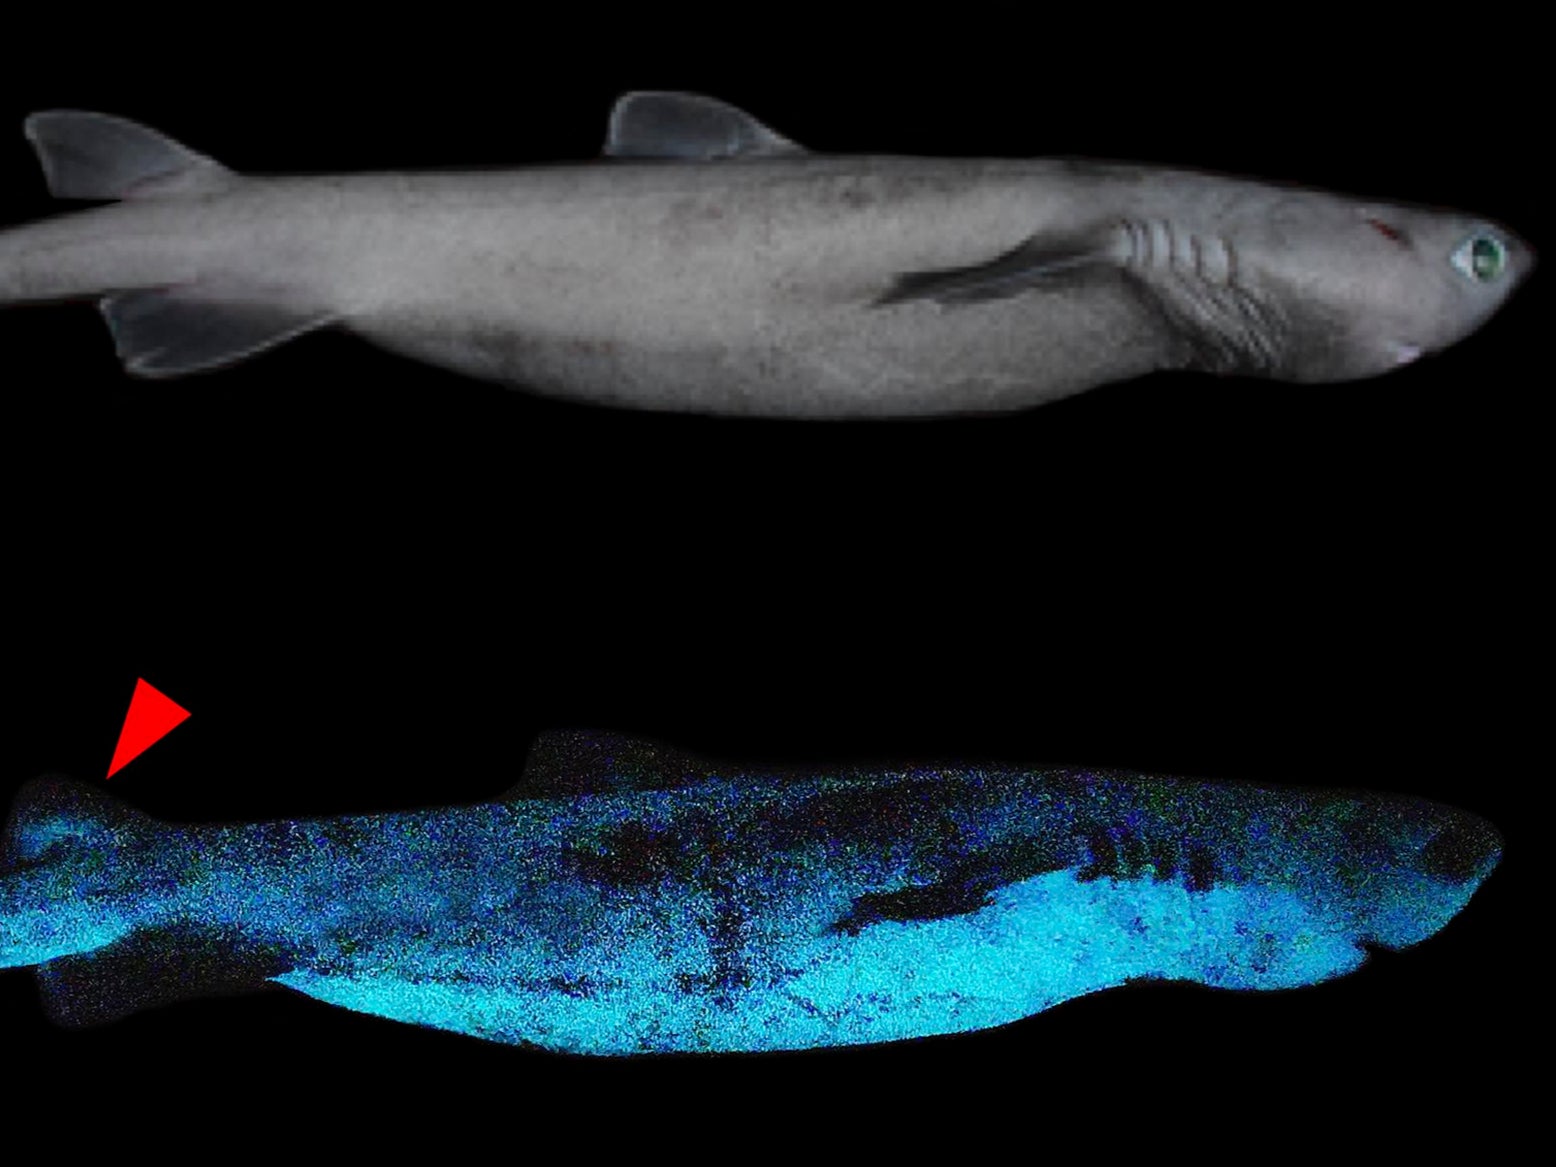 The glowing skin of the kitefin shark